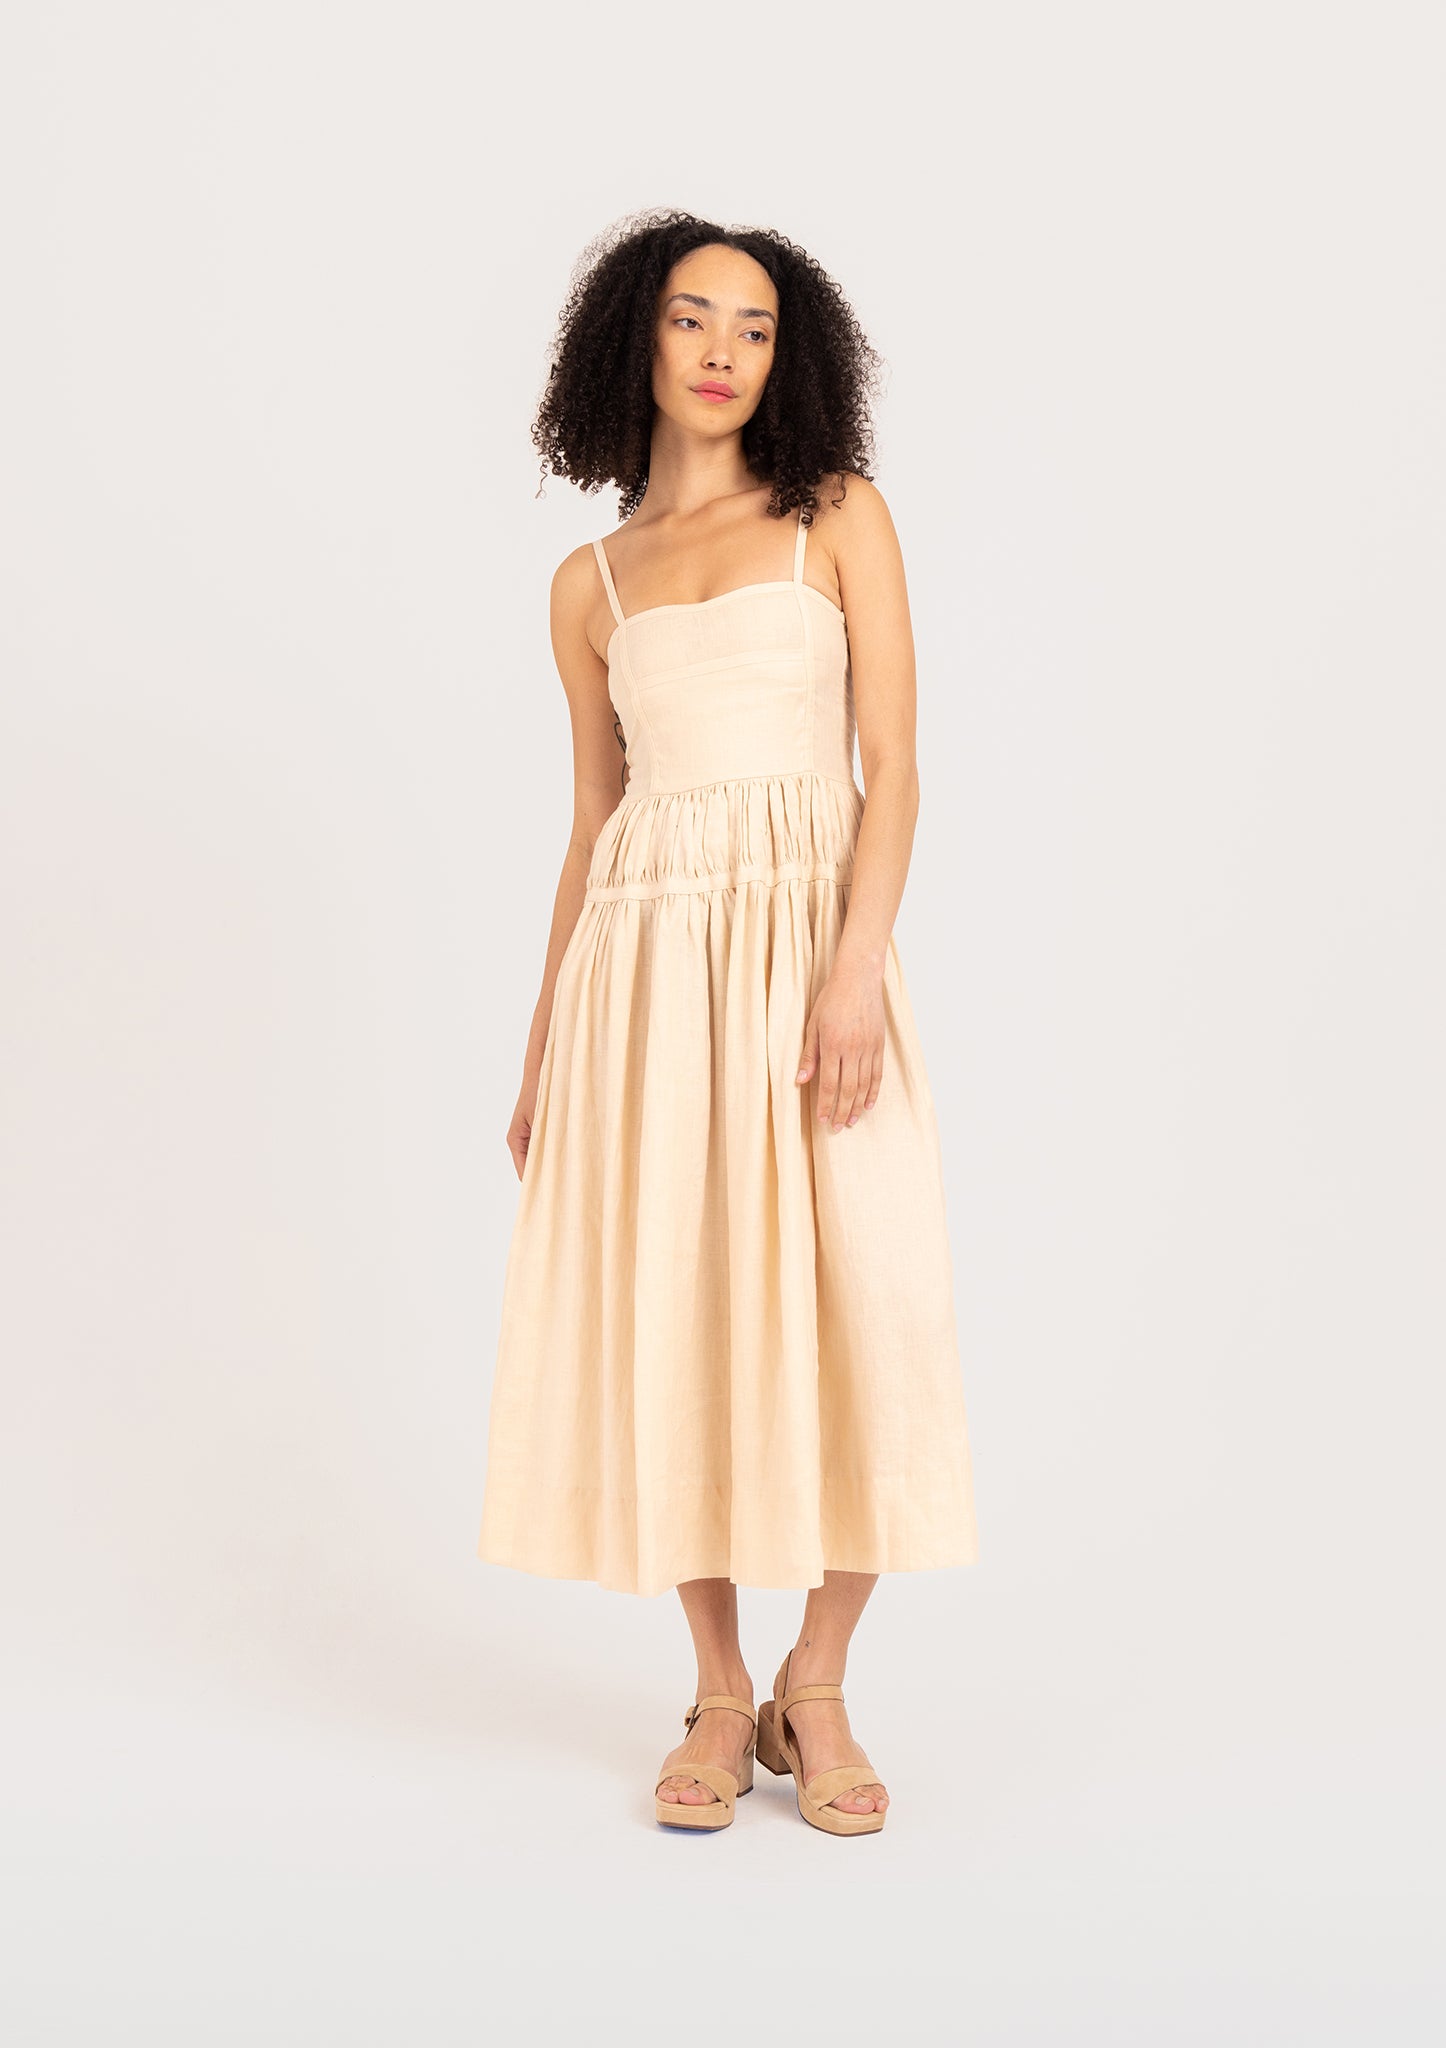 Pippa Dress | BEL KAZAN | Cream Linen Dress Made in Bali